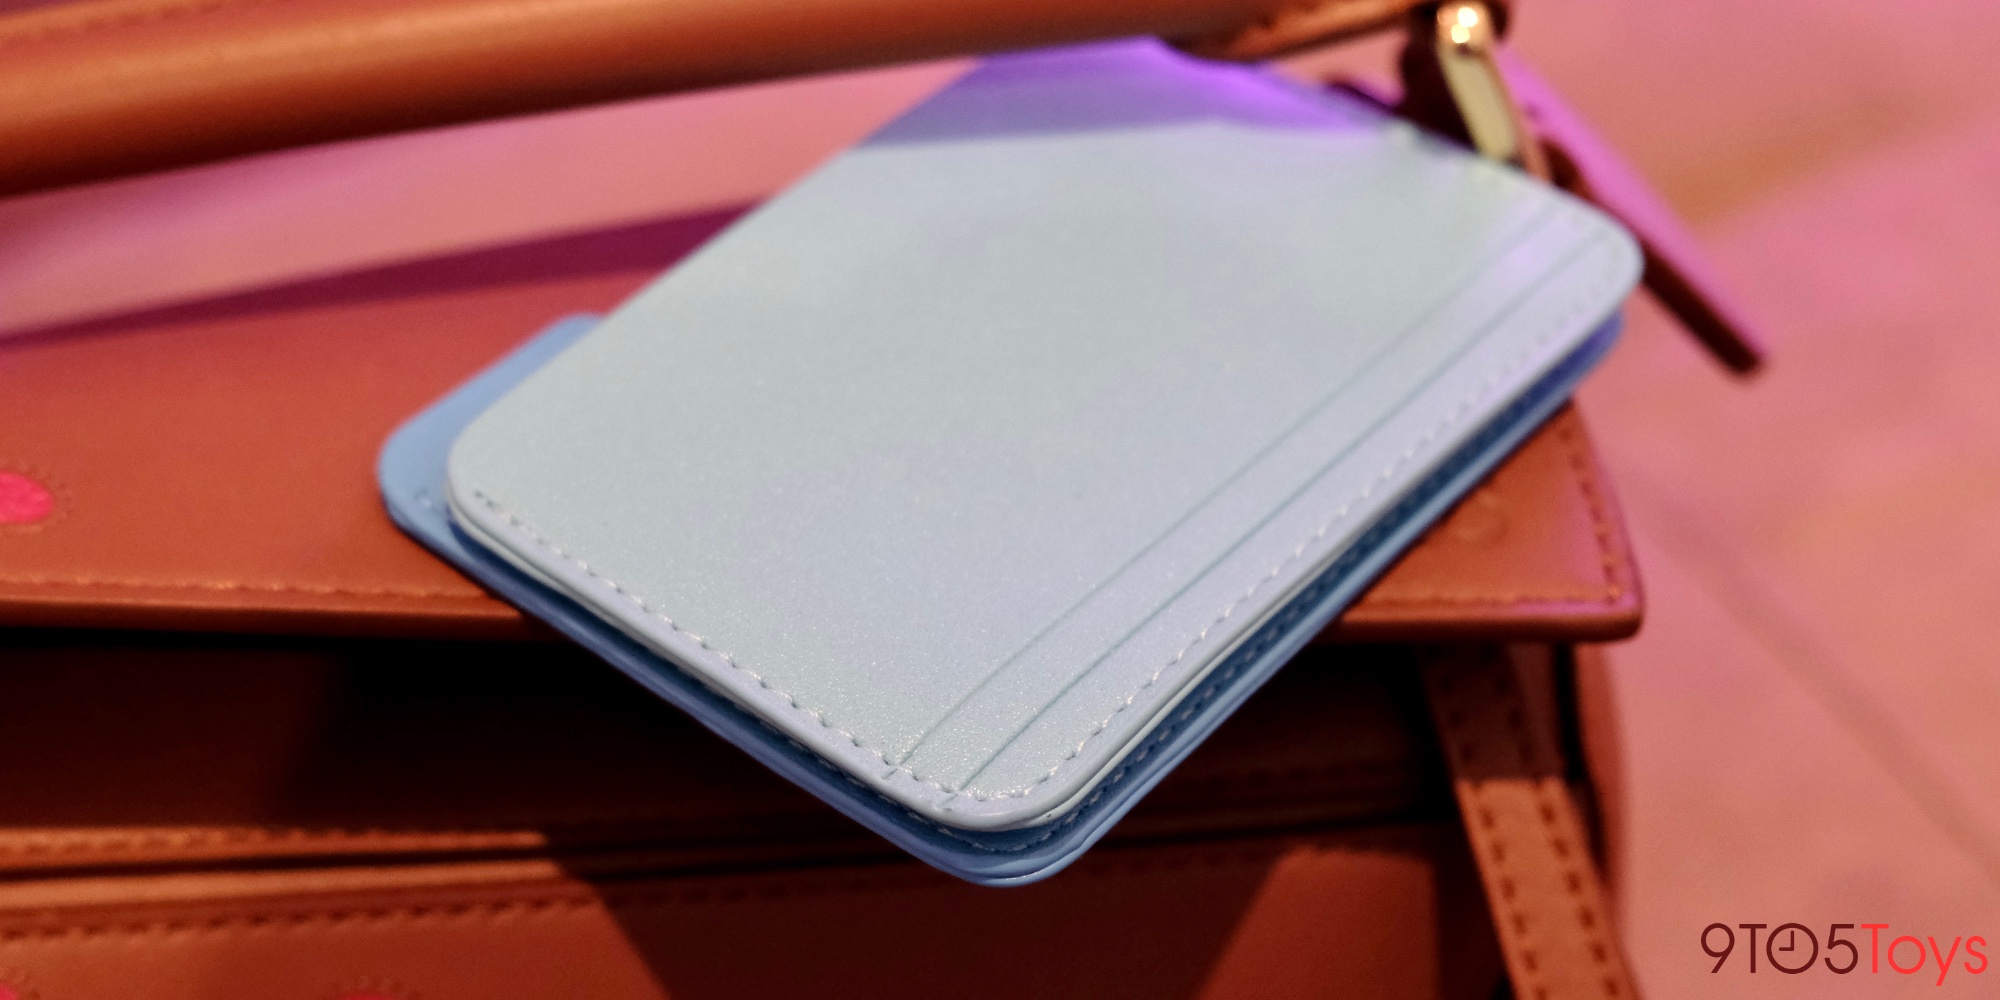 Unaltd Folder Wallet delivers signature Apple iconography